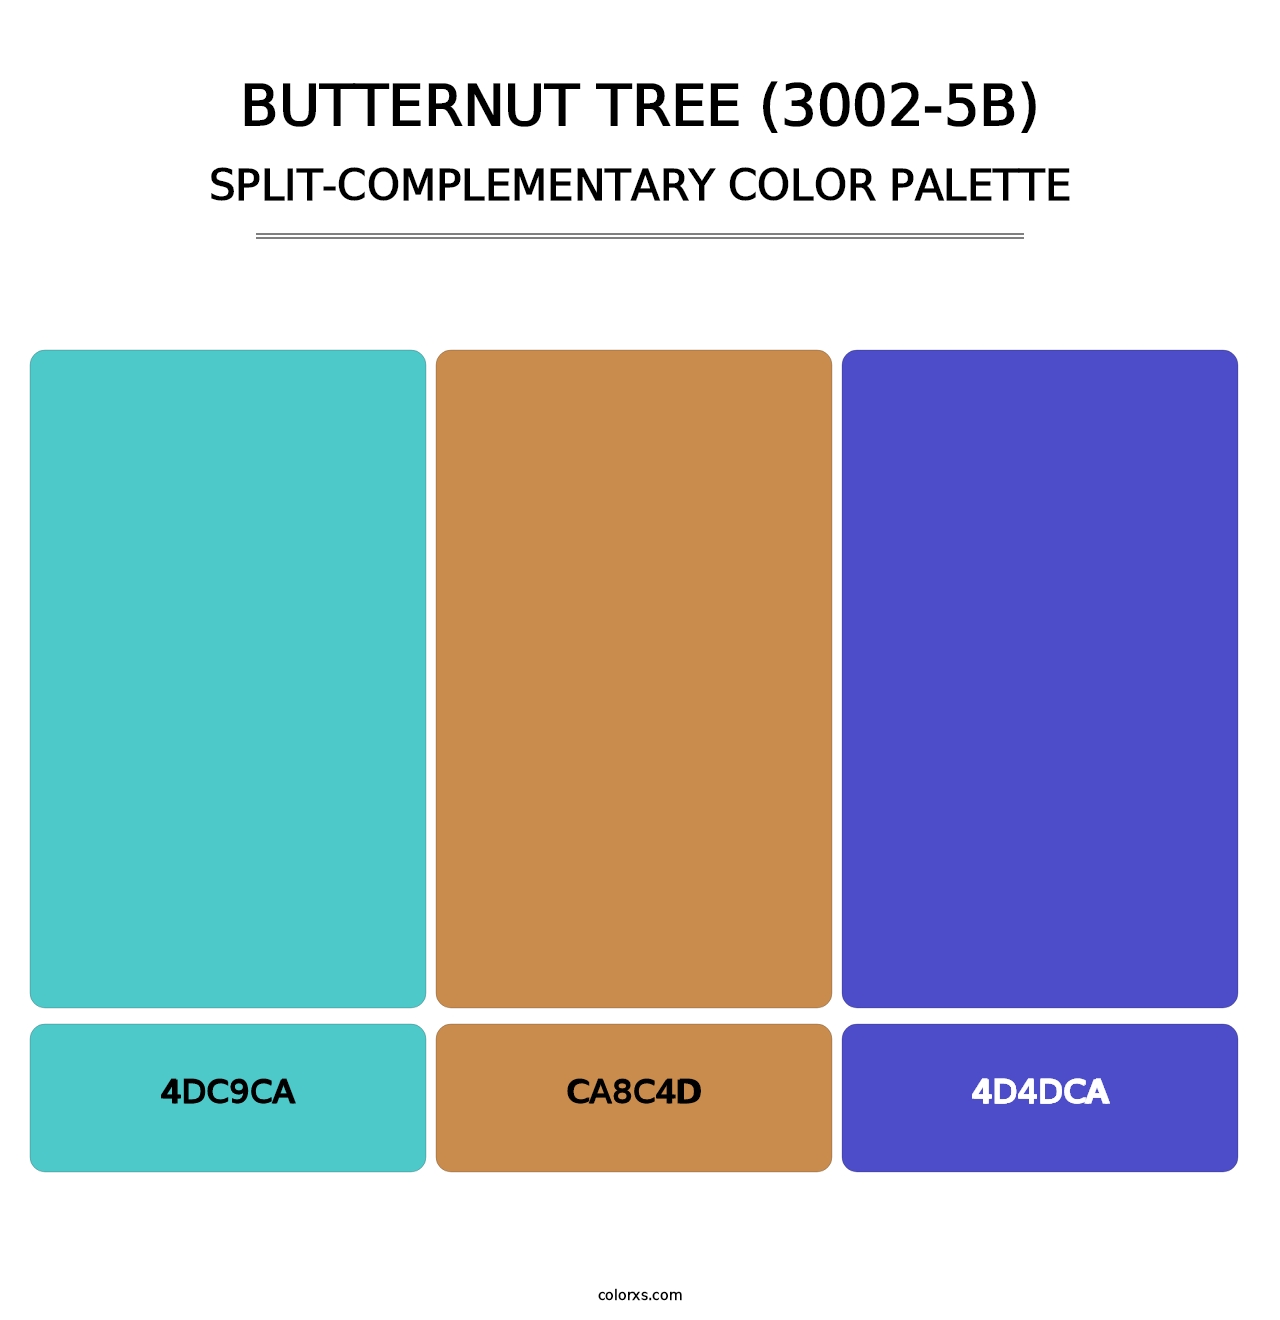 Butternut Tree (3002-5B) - Split-Complementary Color Palette